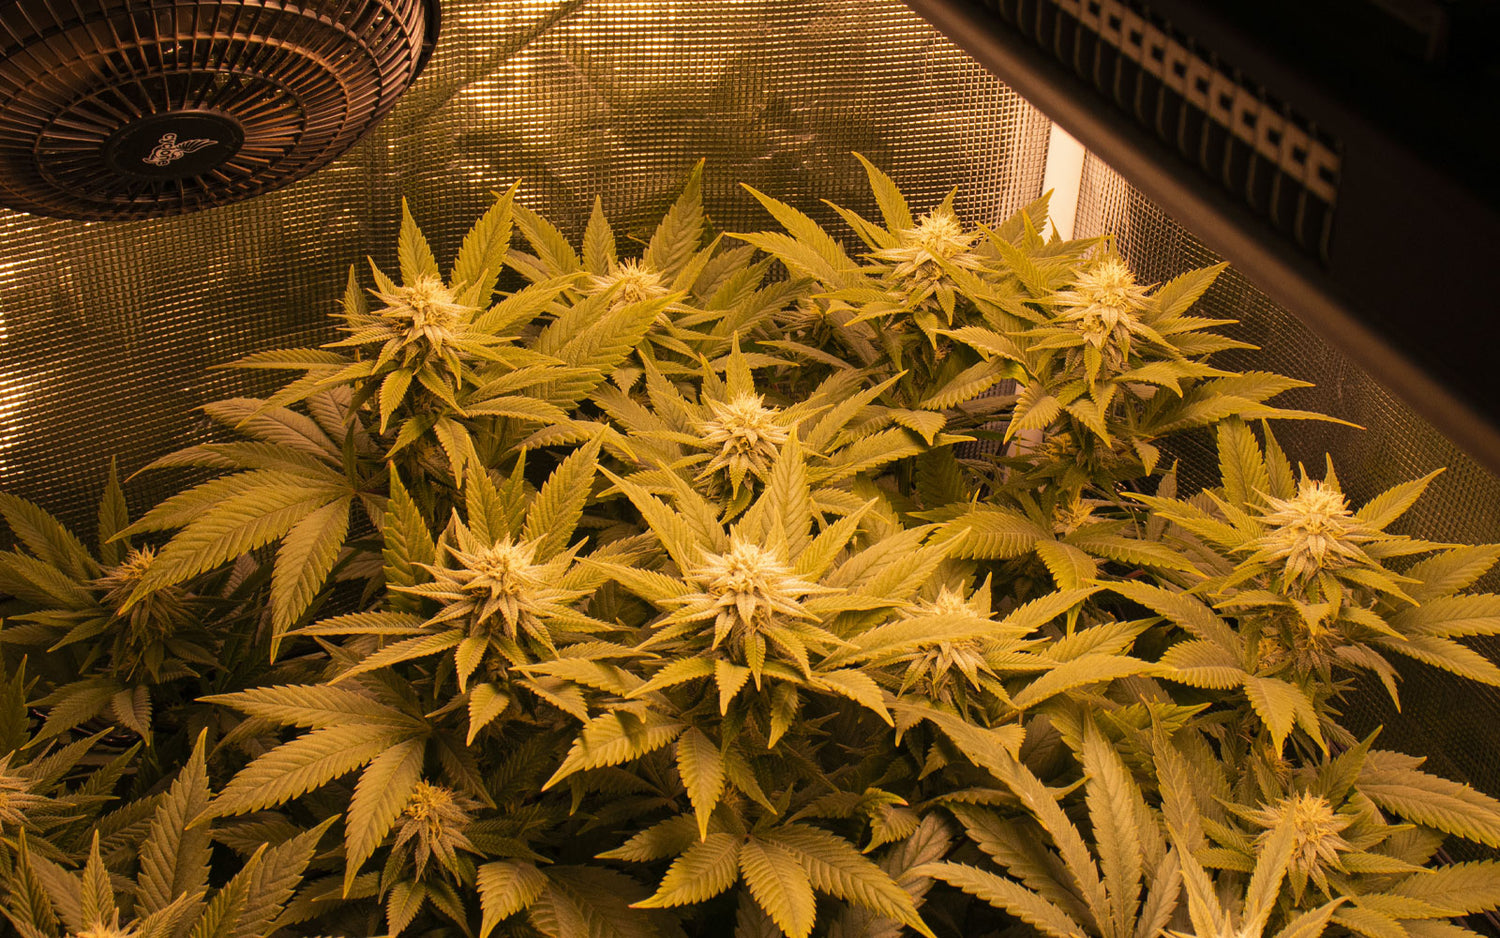 luz led e implementos de cultivo interior de marihuana 